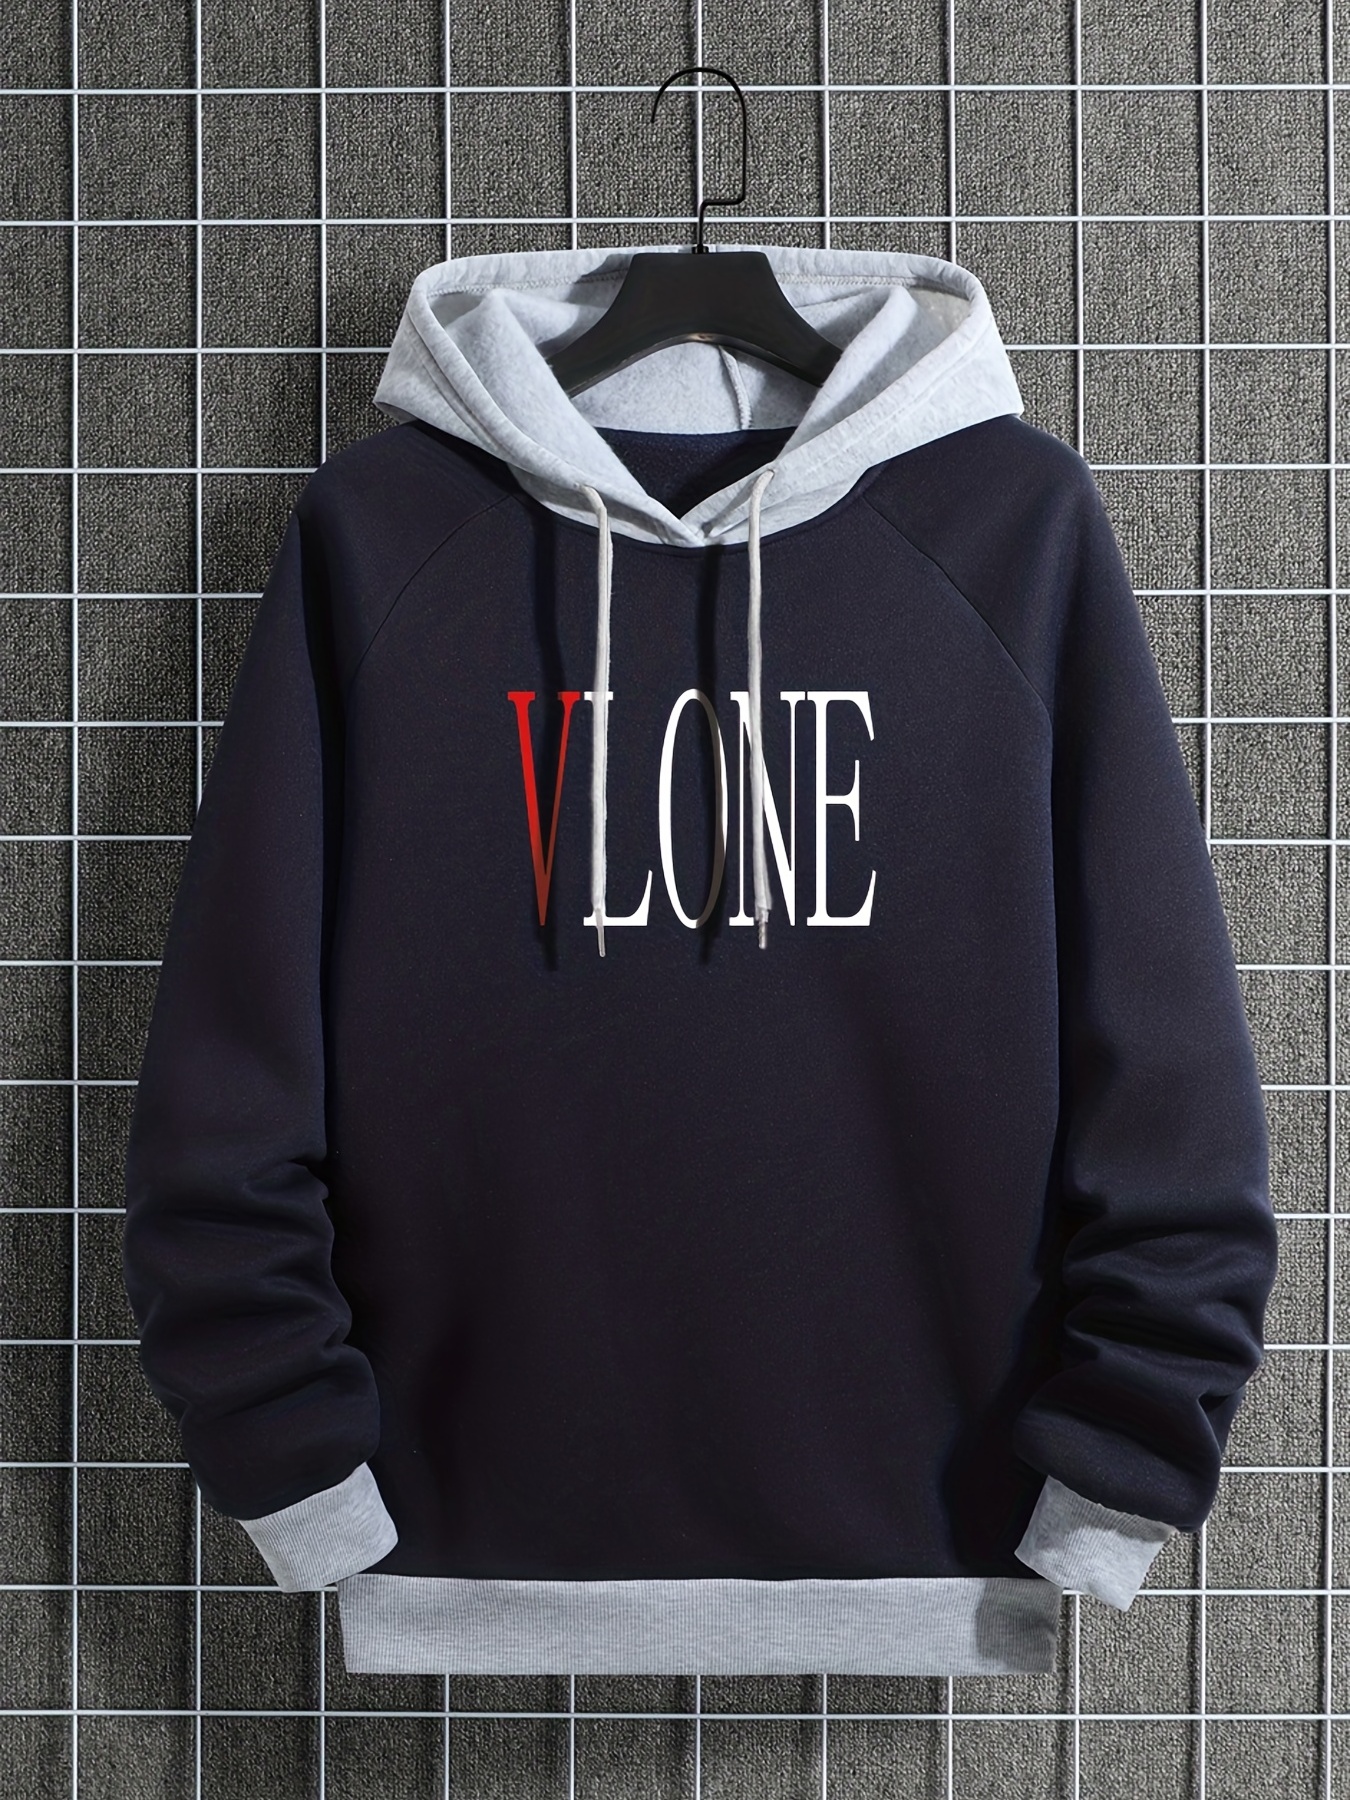 VLONE Man Hoodies100% Cotton Sweatshirts Men Clothing Sweatshirt